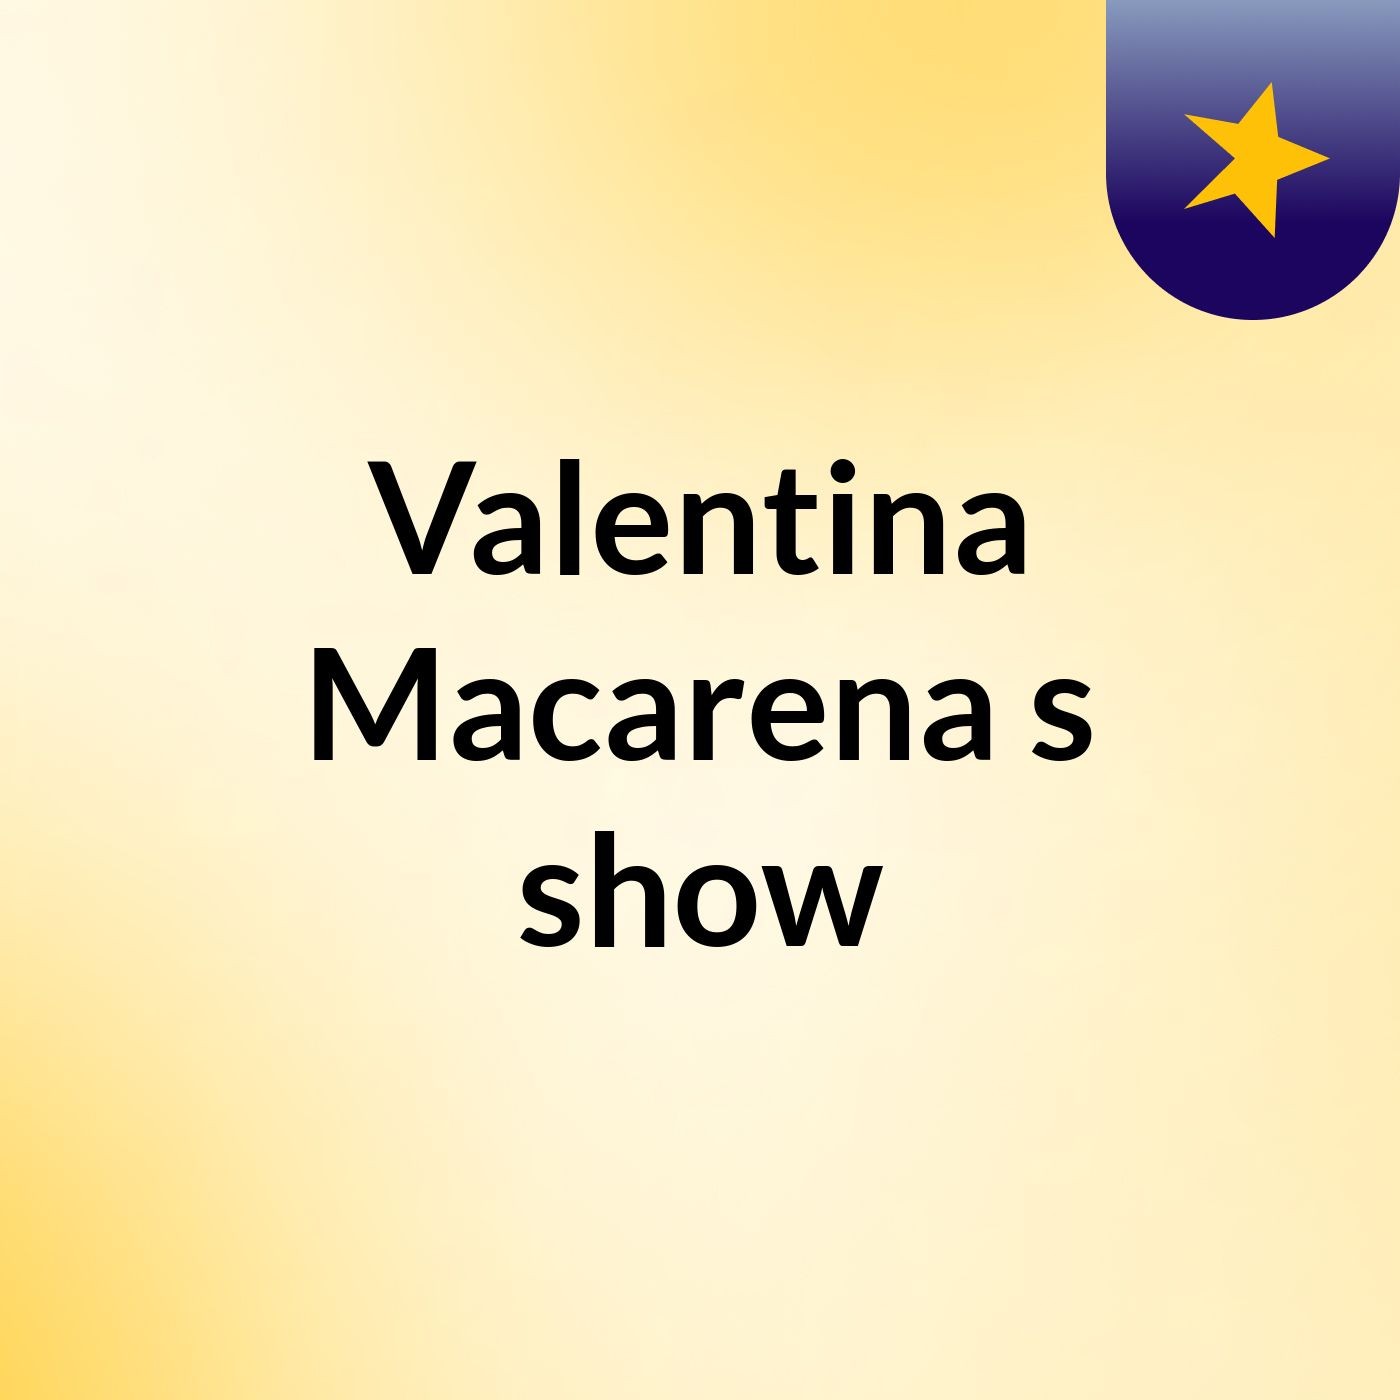 Valentina Macarena's show